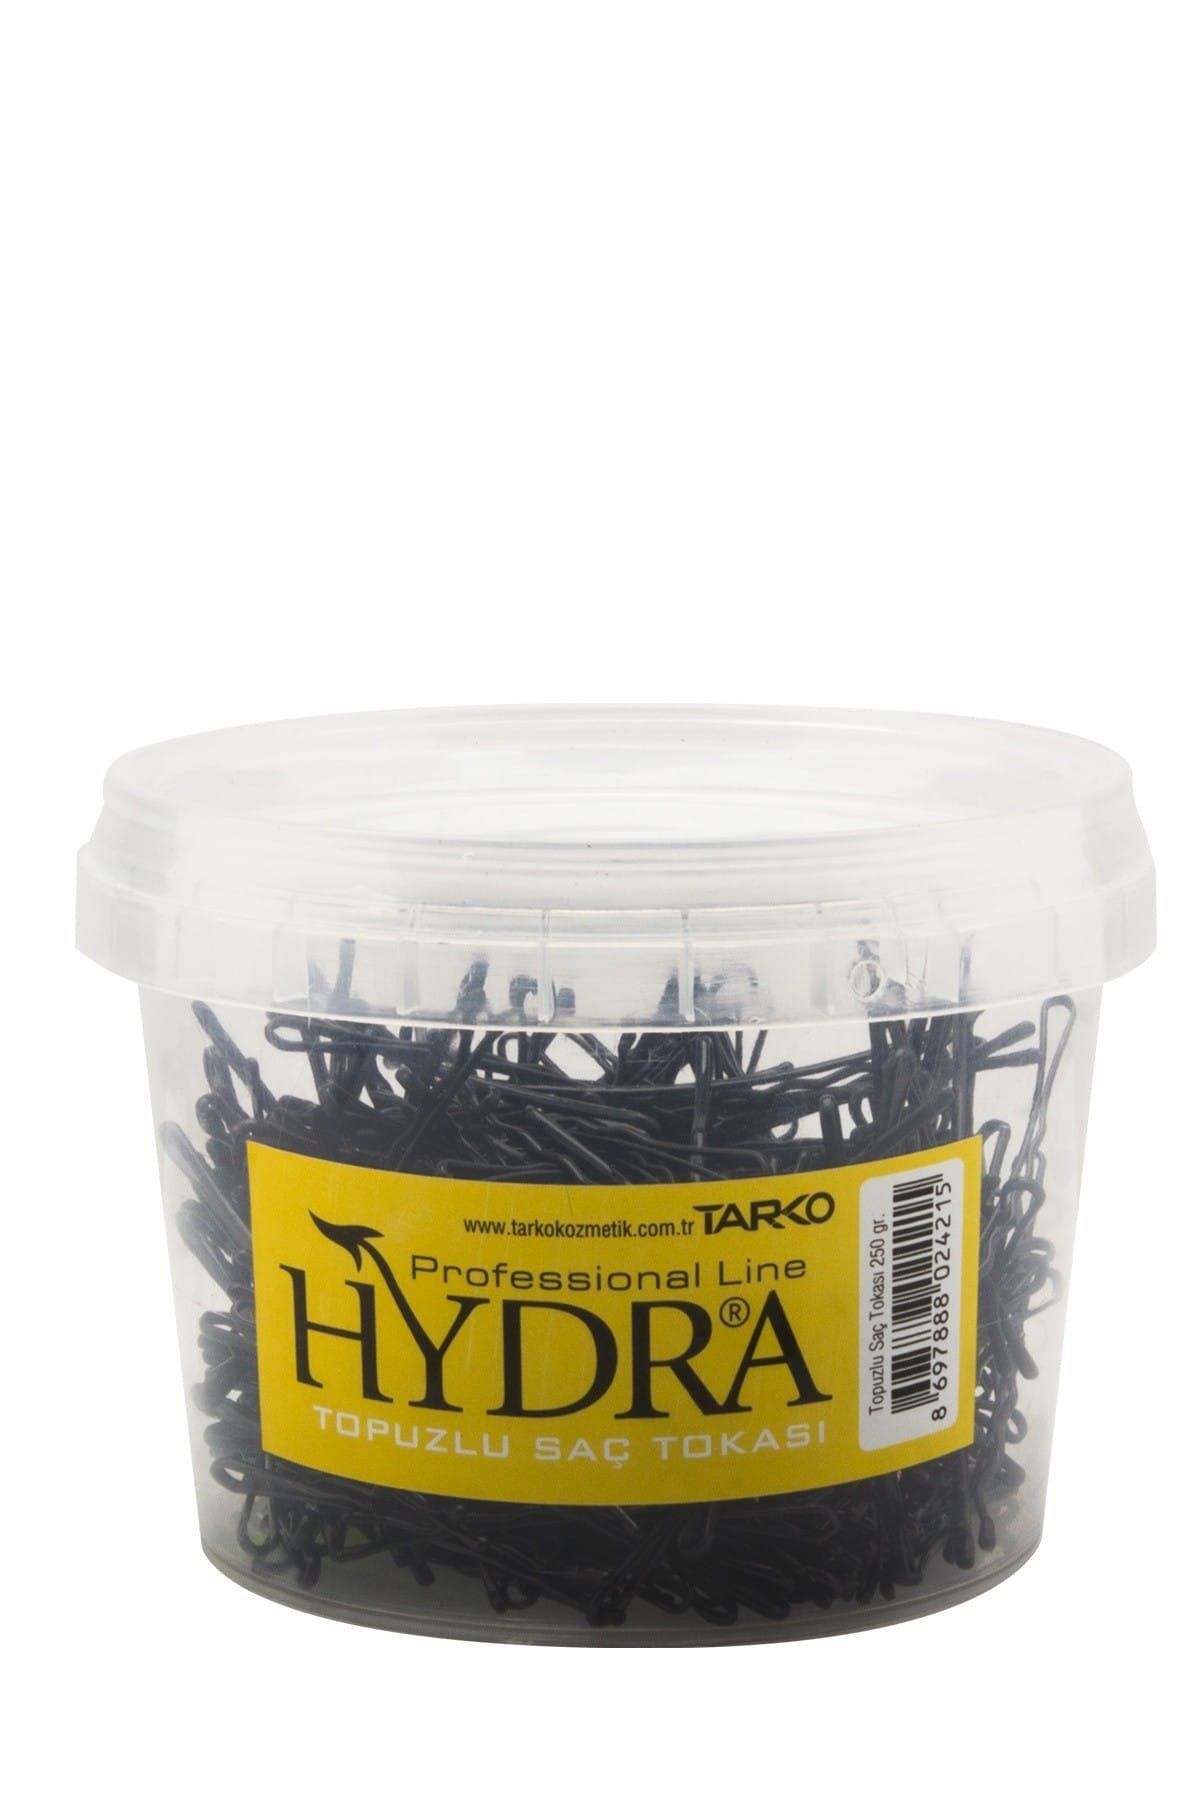 Hydra Topuzlu Saç Tokası - 250 g 8697888024215